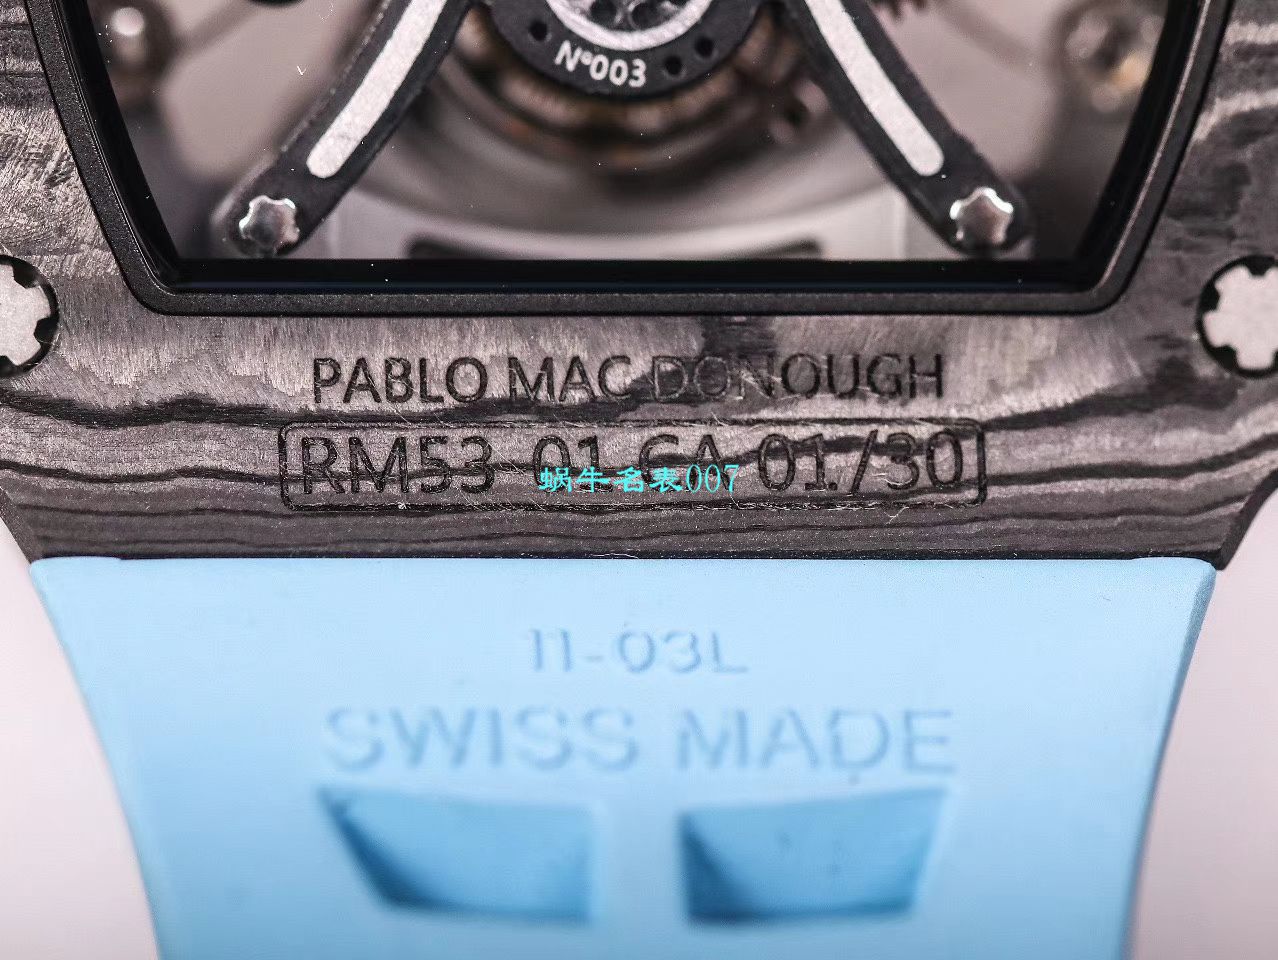 【JB厂理查德米勒复刻手表】Richard Mille男士系列RM 53-01 PABLO MAC DONOUGH陀飞轮腕表 / RM 53-01